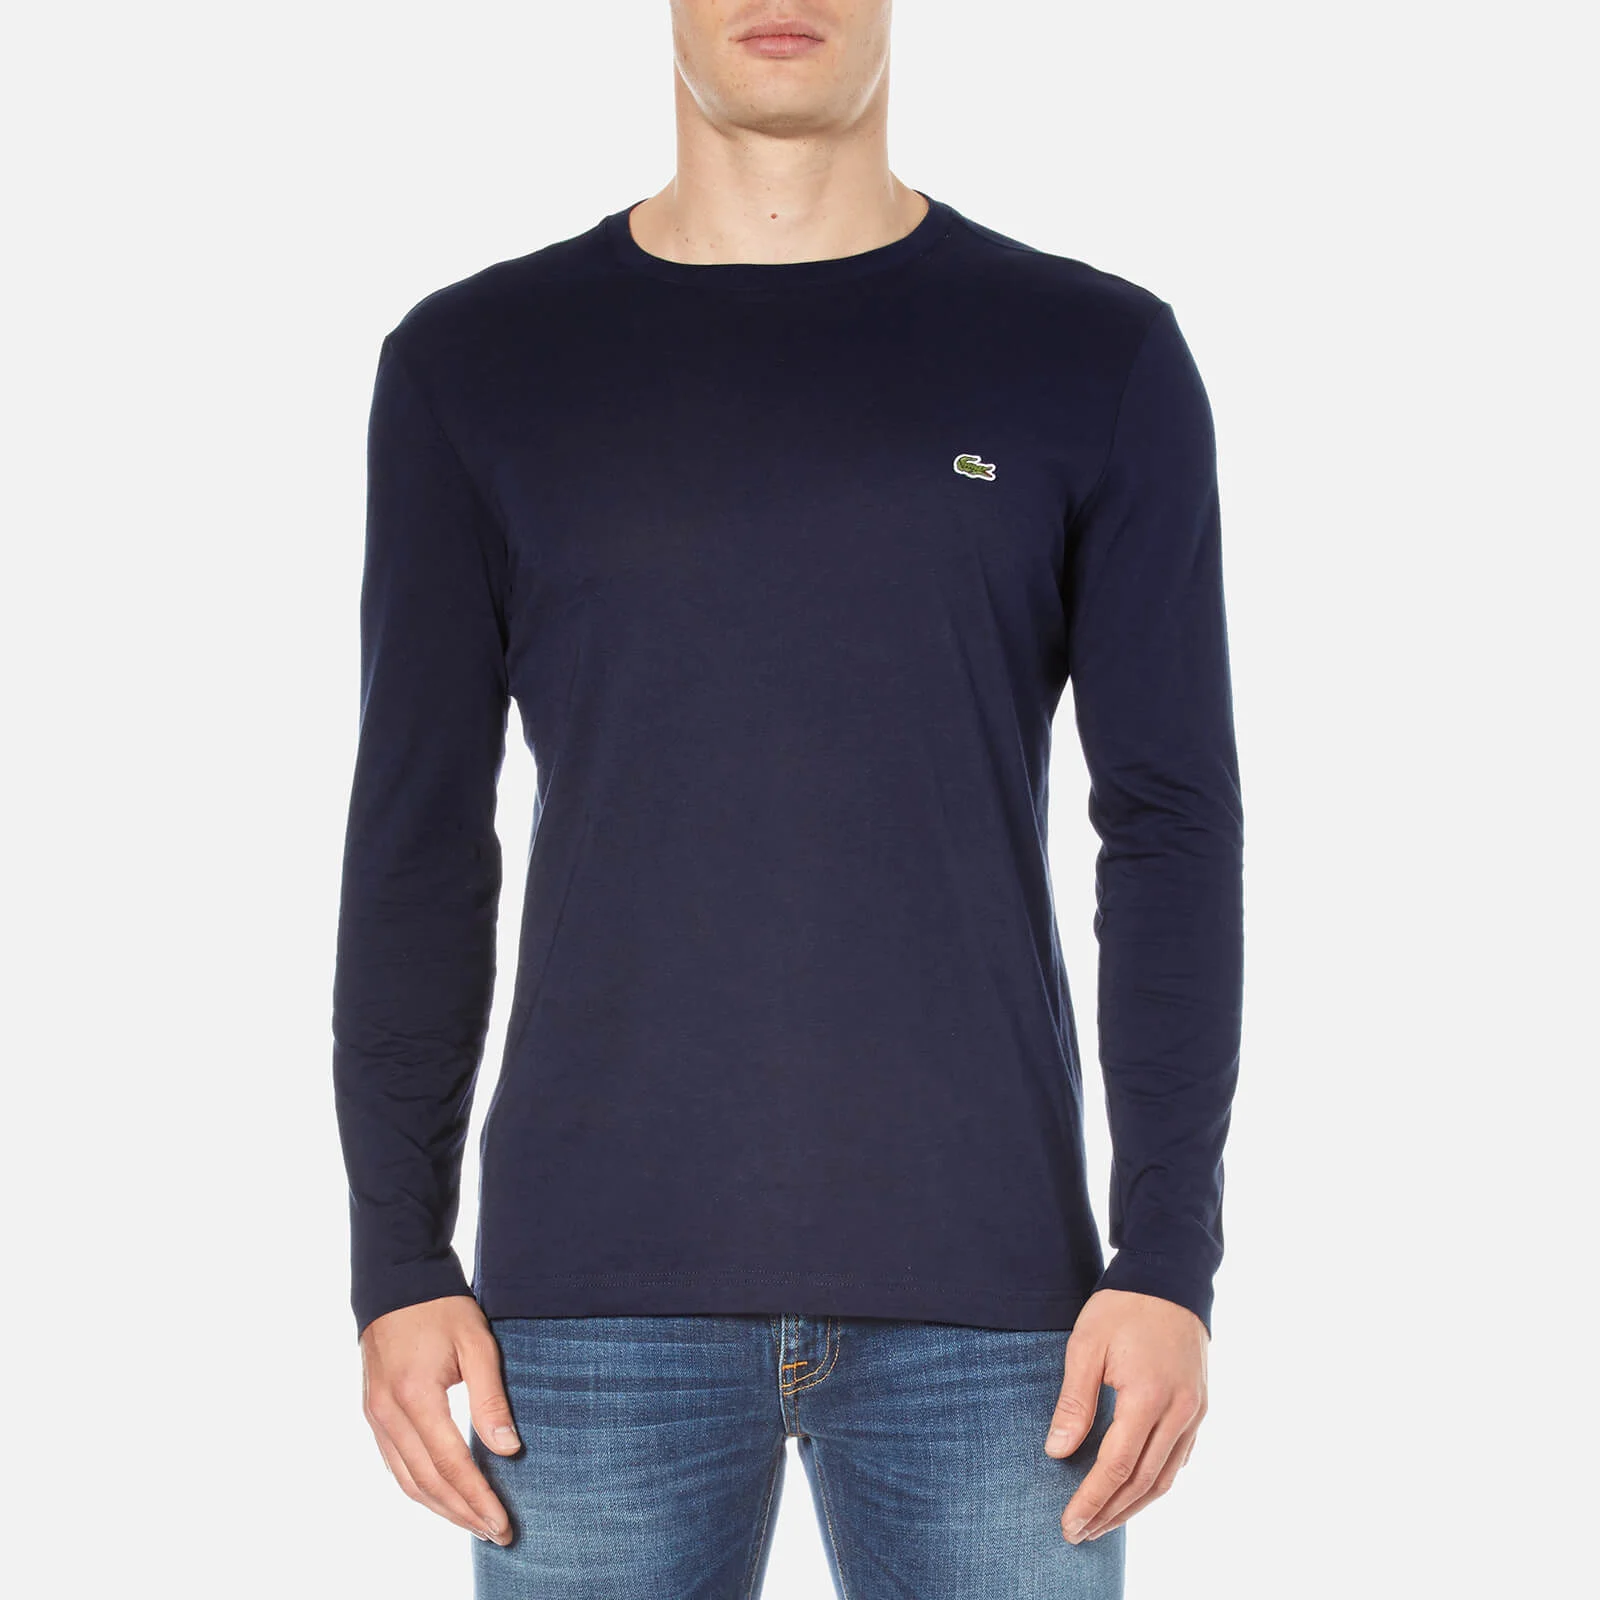 Lacoste Men's Long Sleeved Crew Neck T-Shirt - Navy Blue Image 1